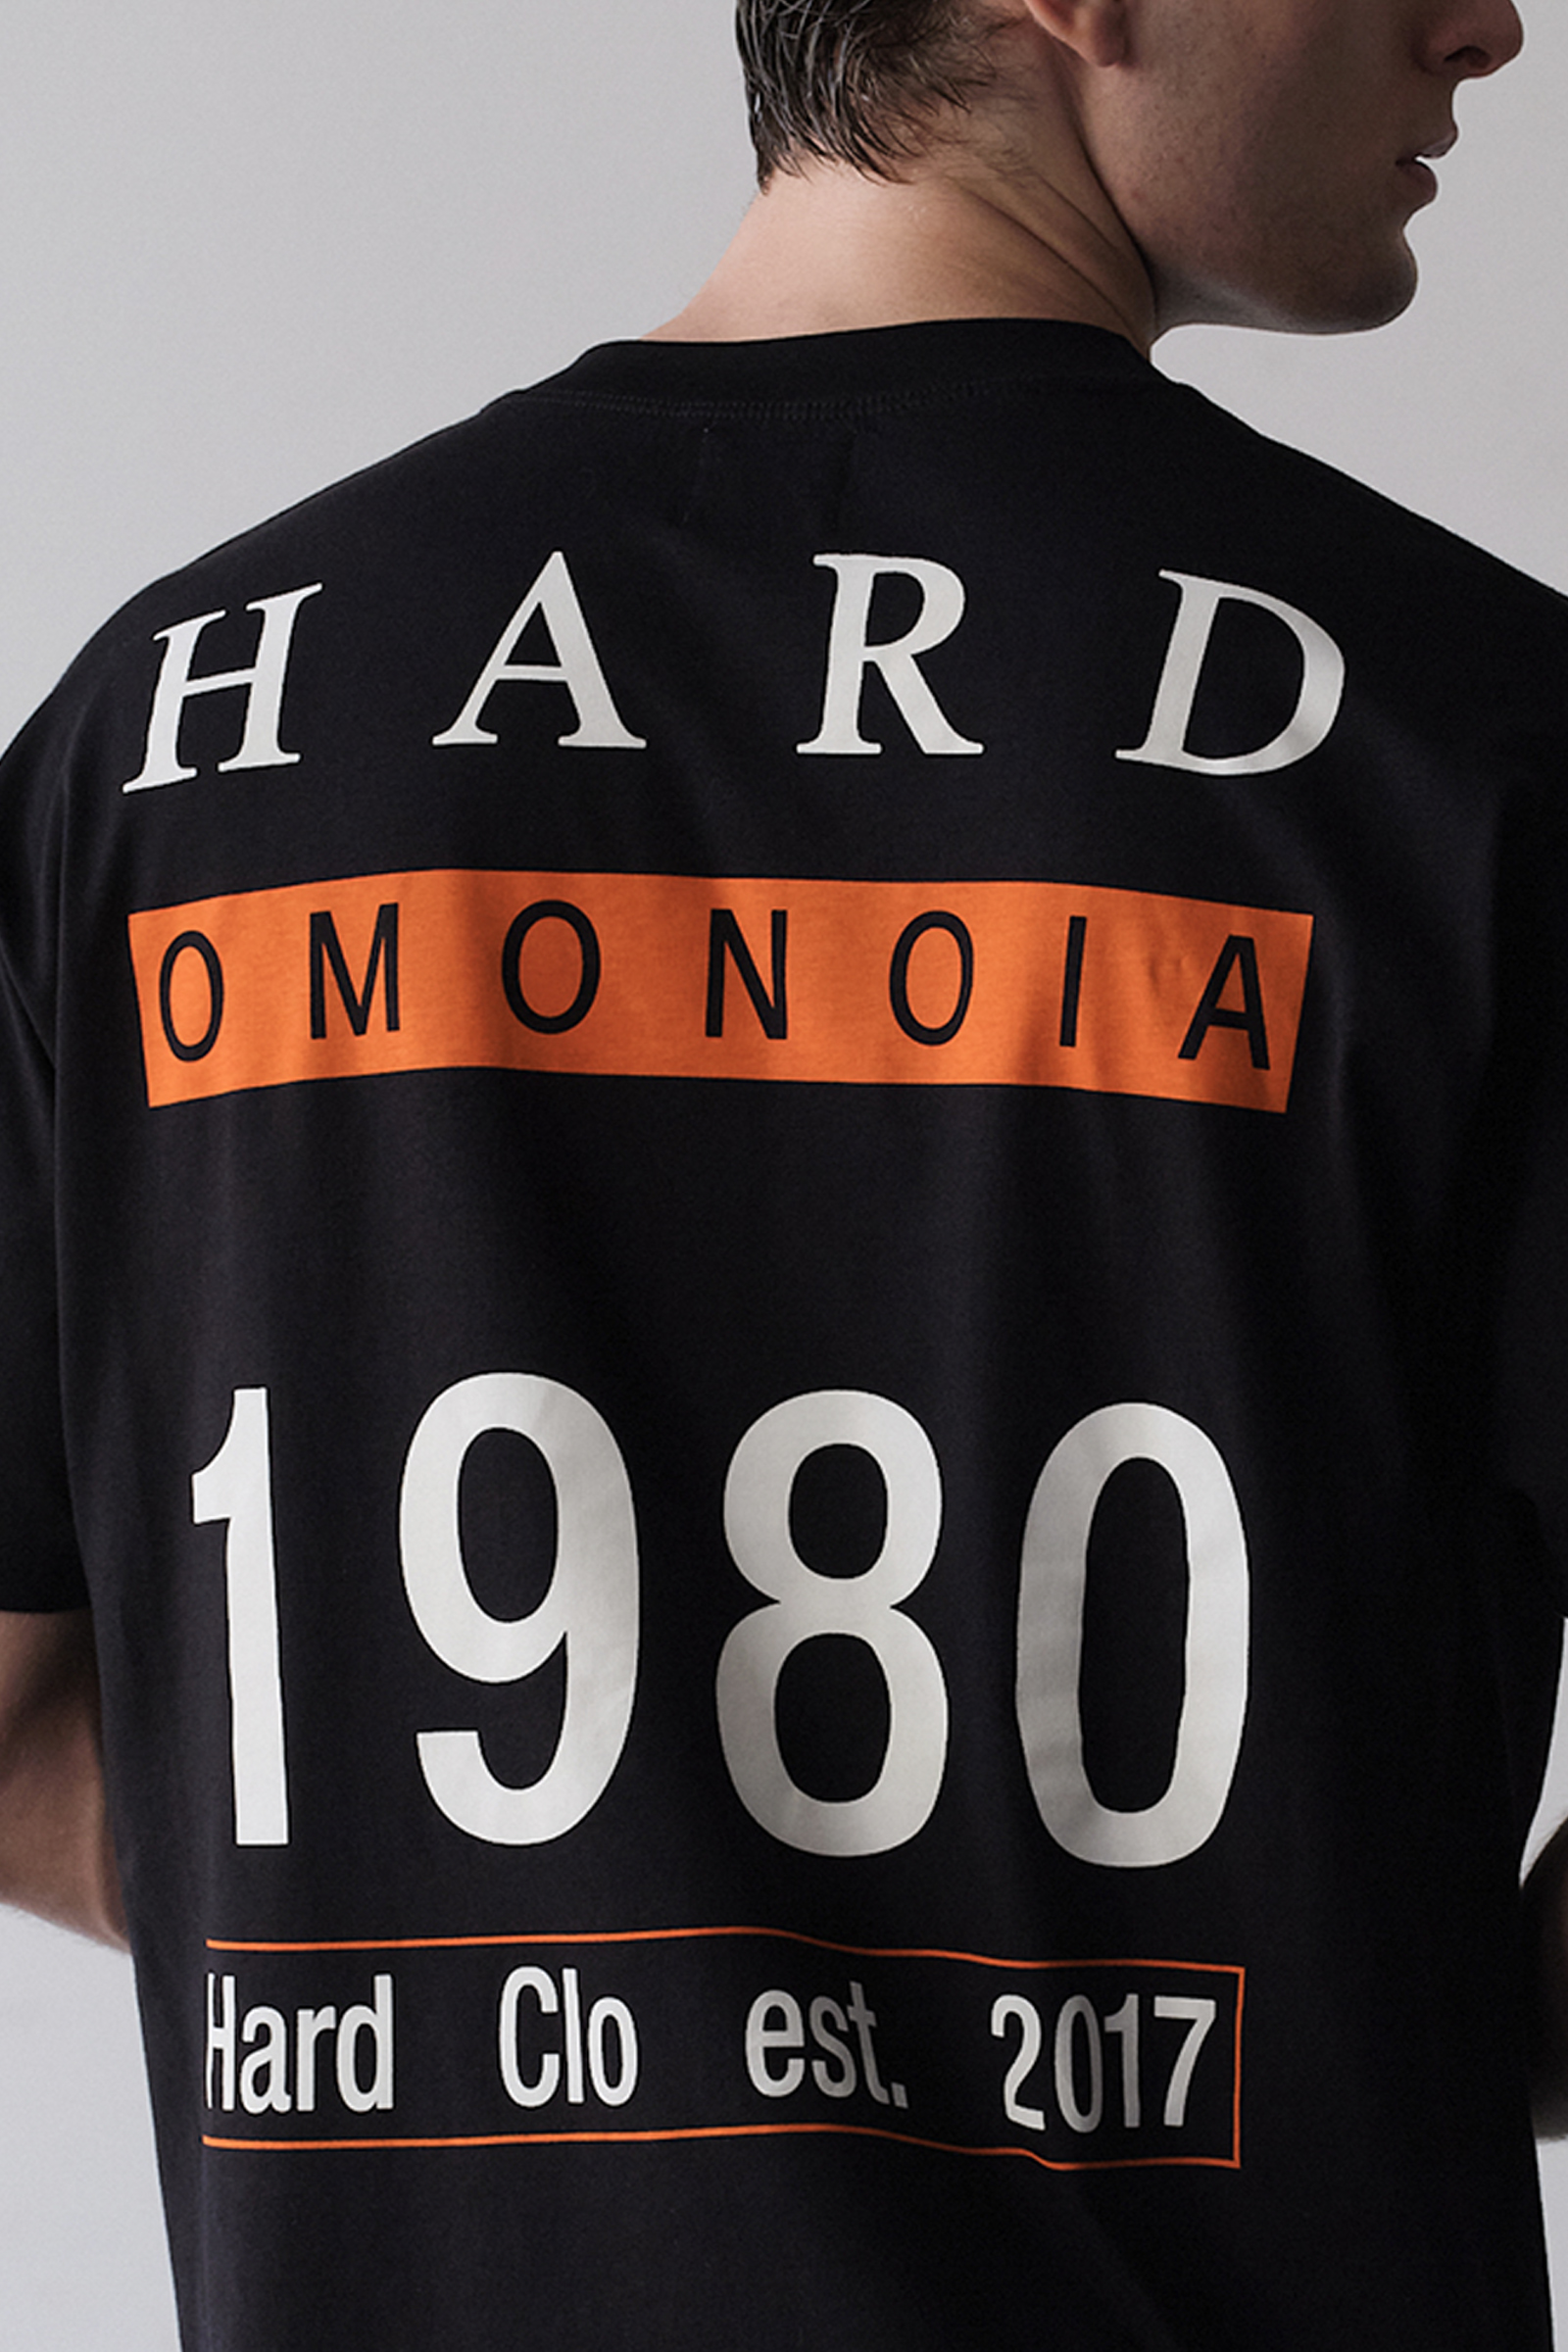 Hard Omonoia 1980 T-Shirt , Black